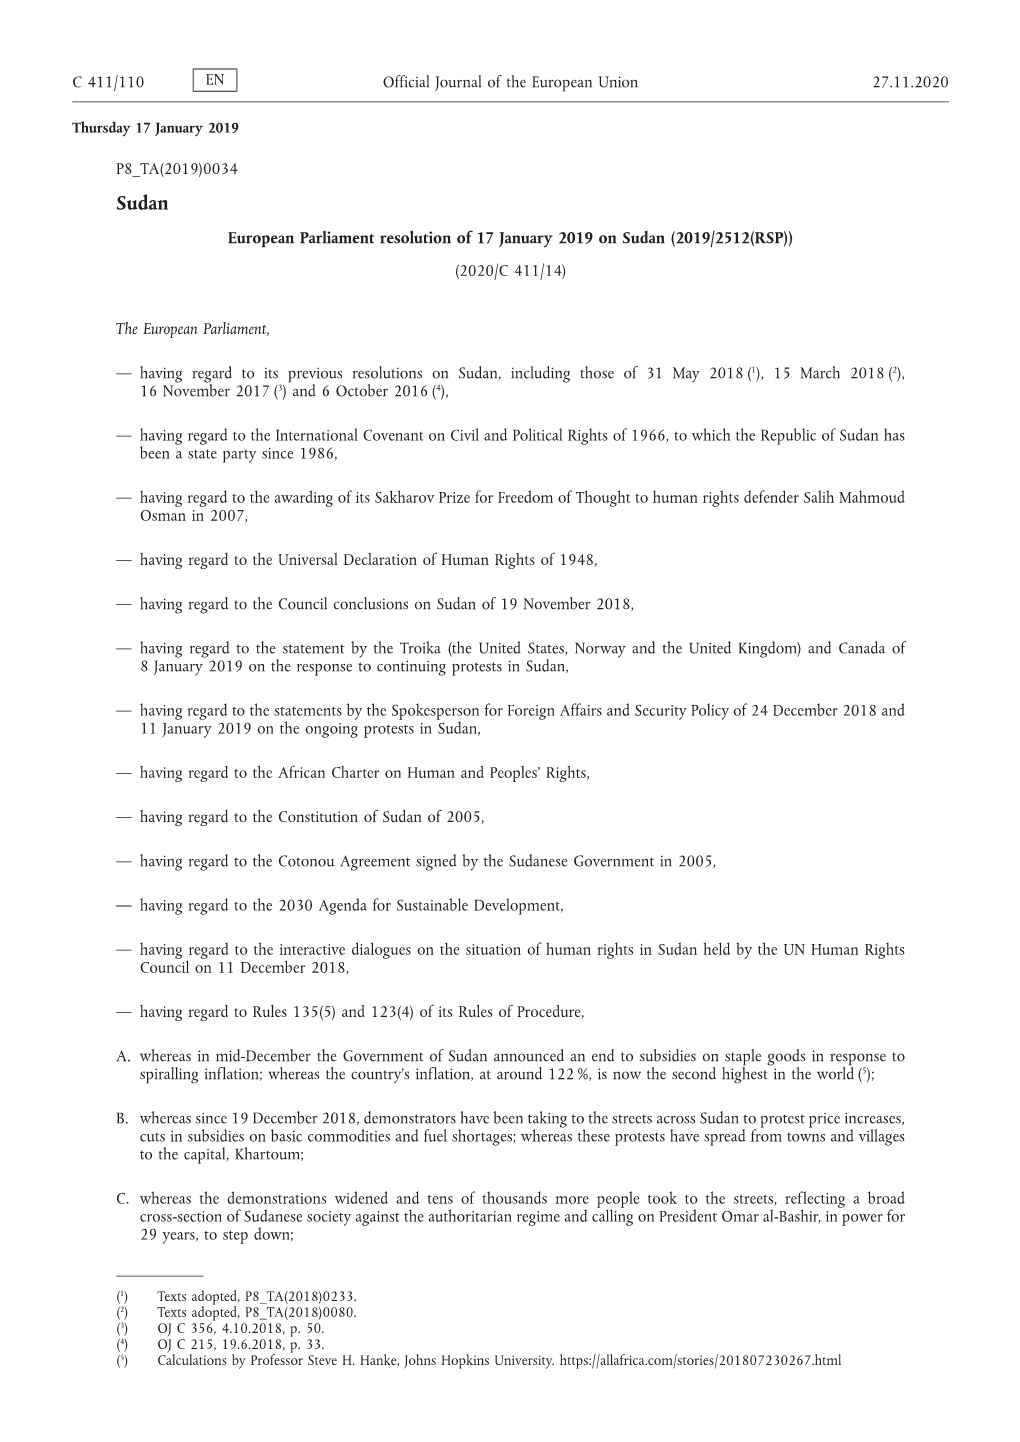 European Parliament Resolution of 17 January 2019 on Sudan (2019/2512(RSP)) (2020/C 411/14)